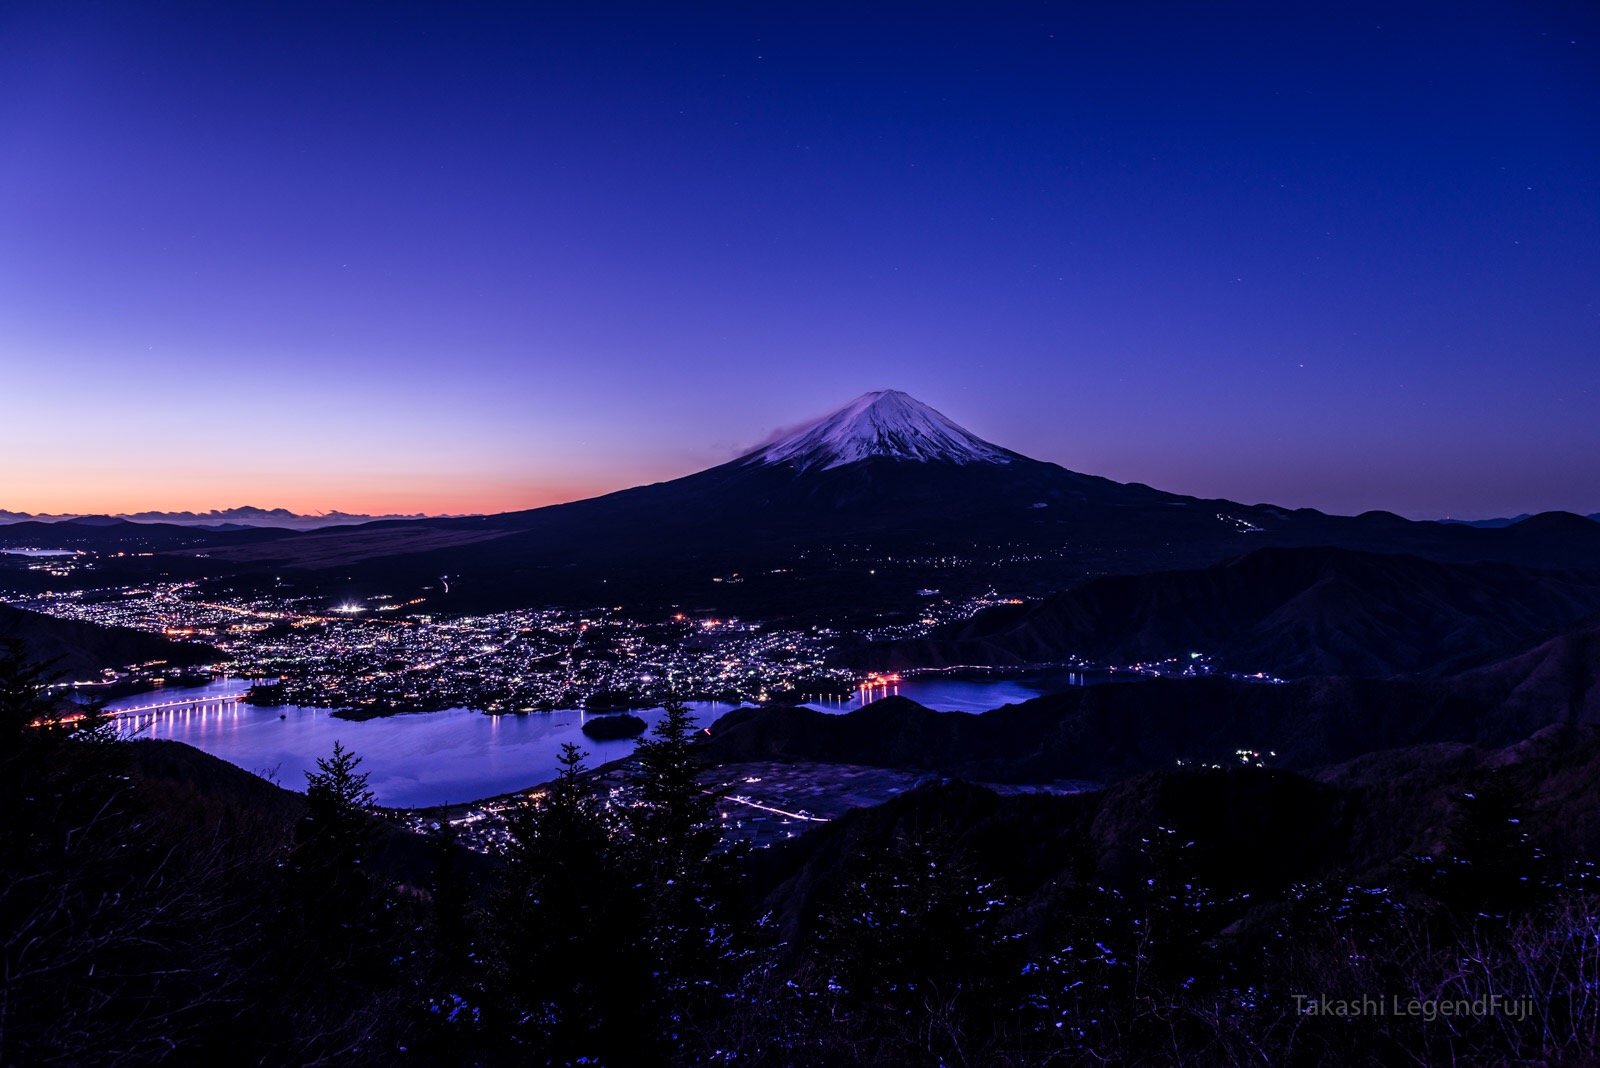 Fuji,Japan,mountain,blue,sky,lake,dawn,beautiful,amazing,wonderful , Takashi